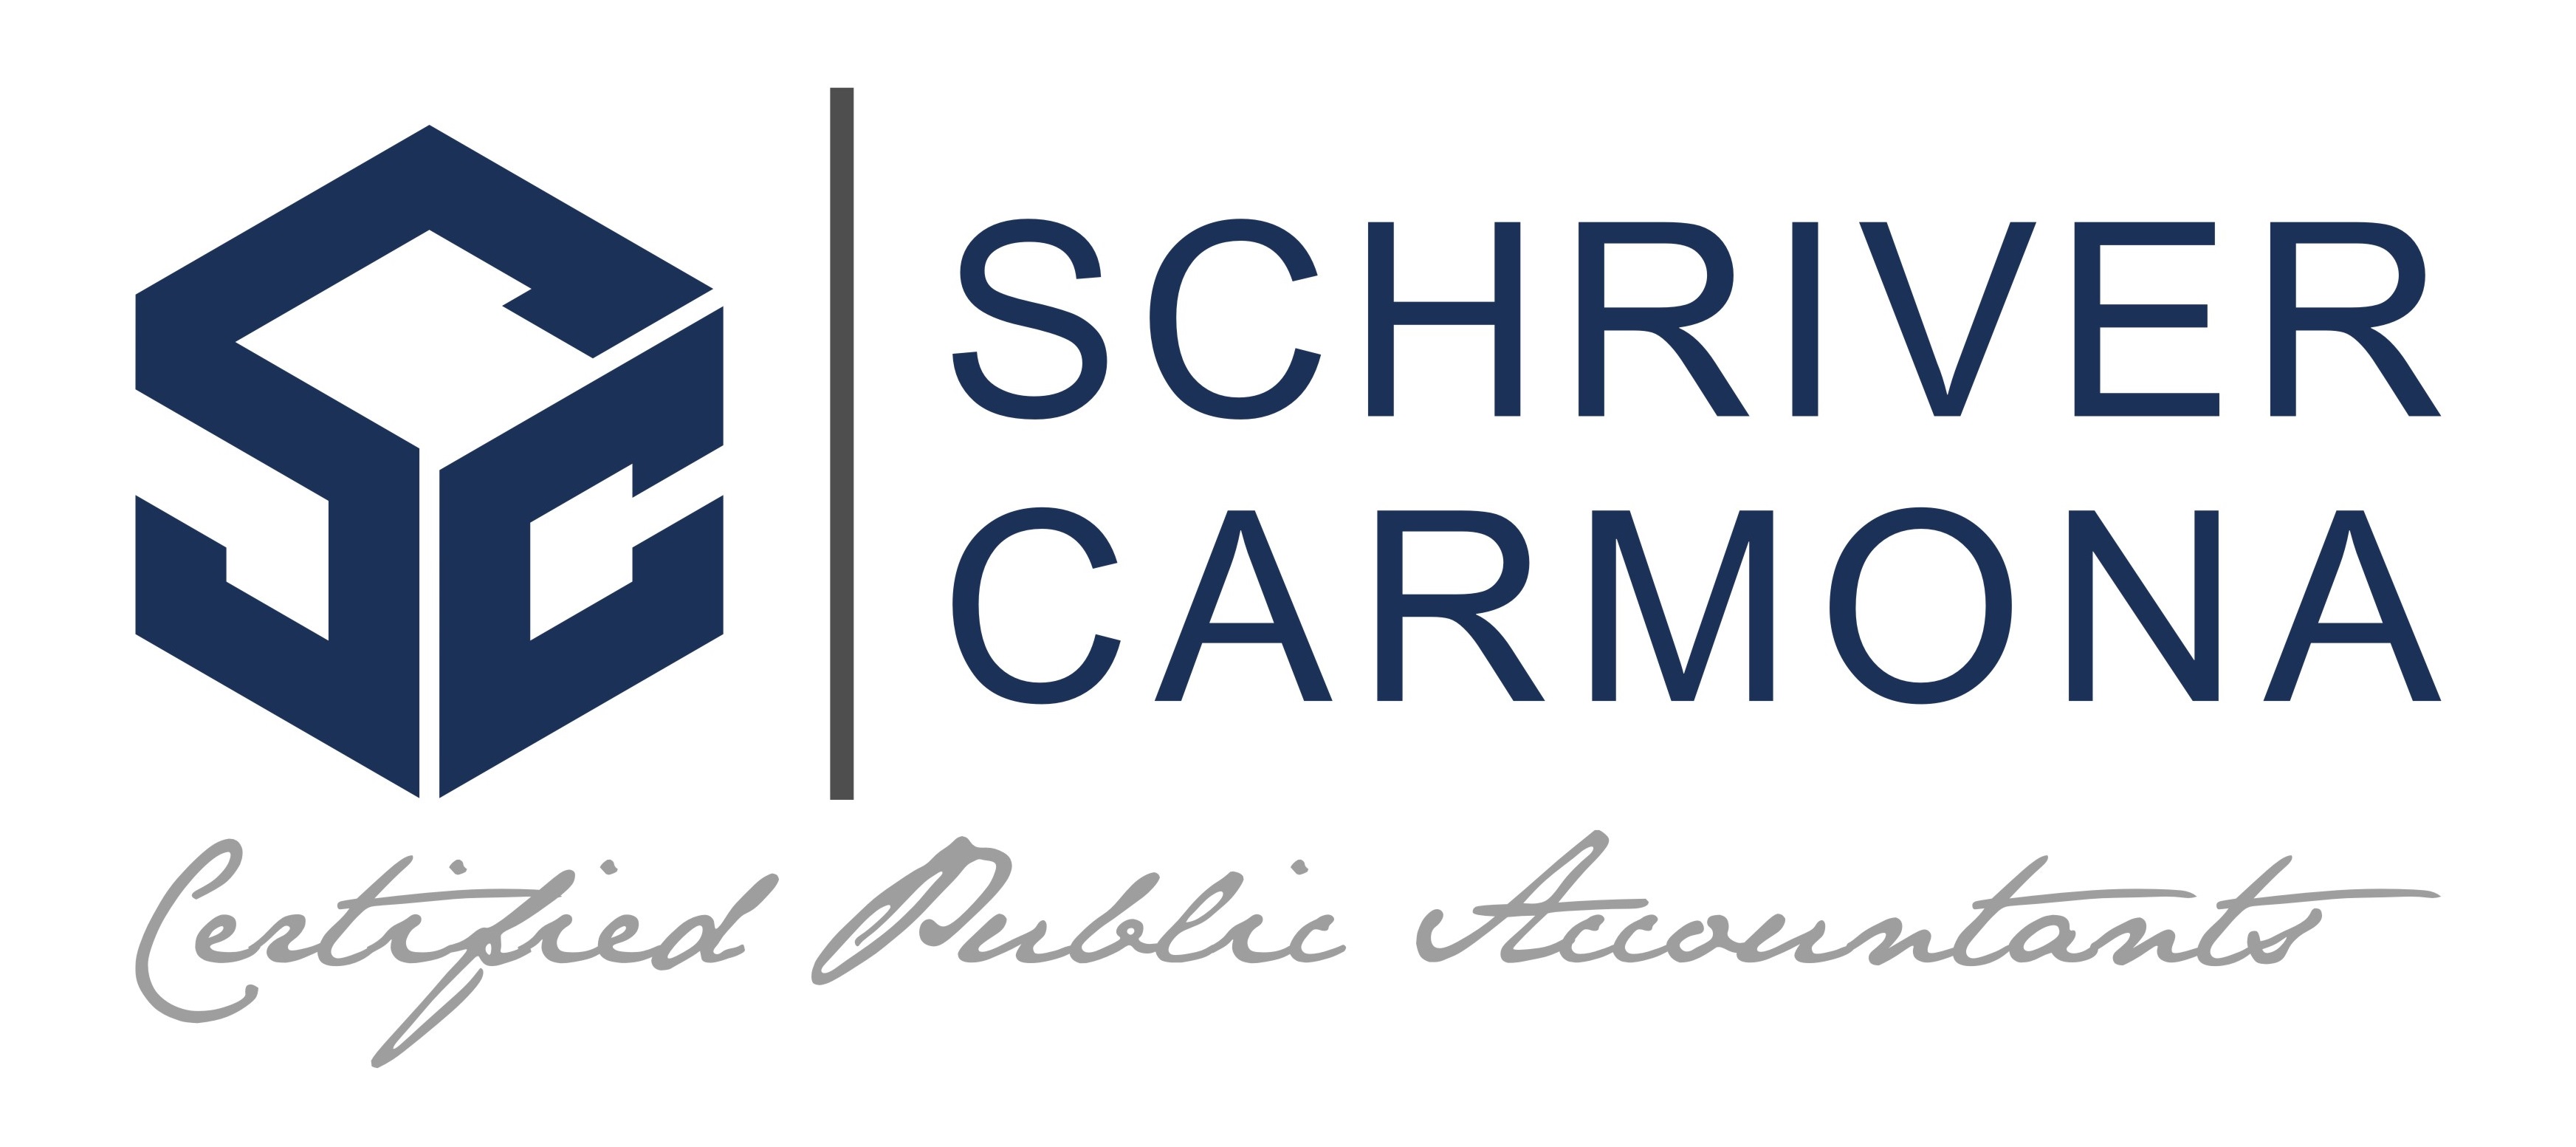 schriver carmona logo.jpg